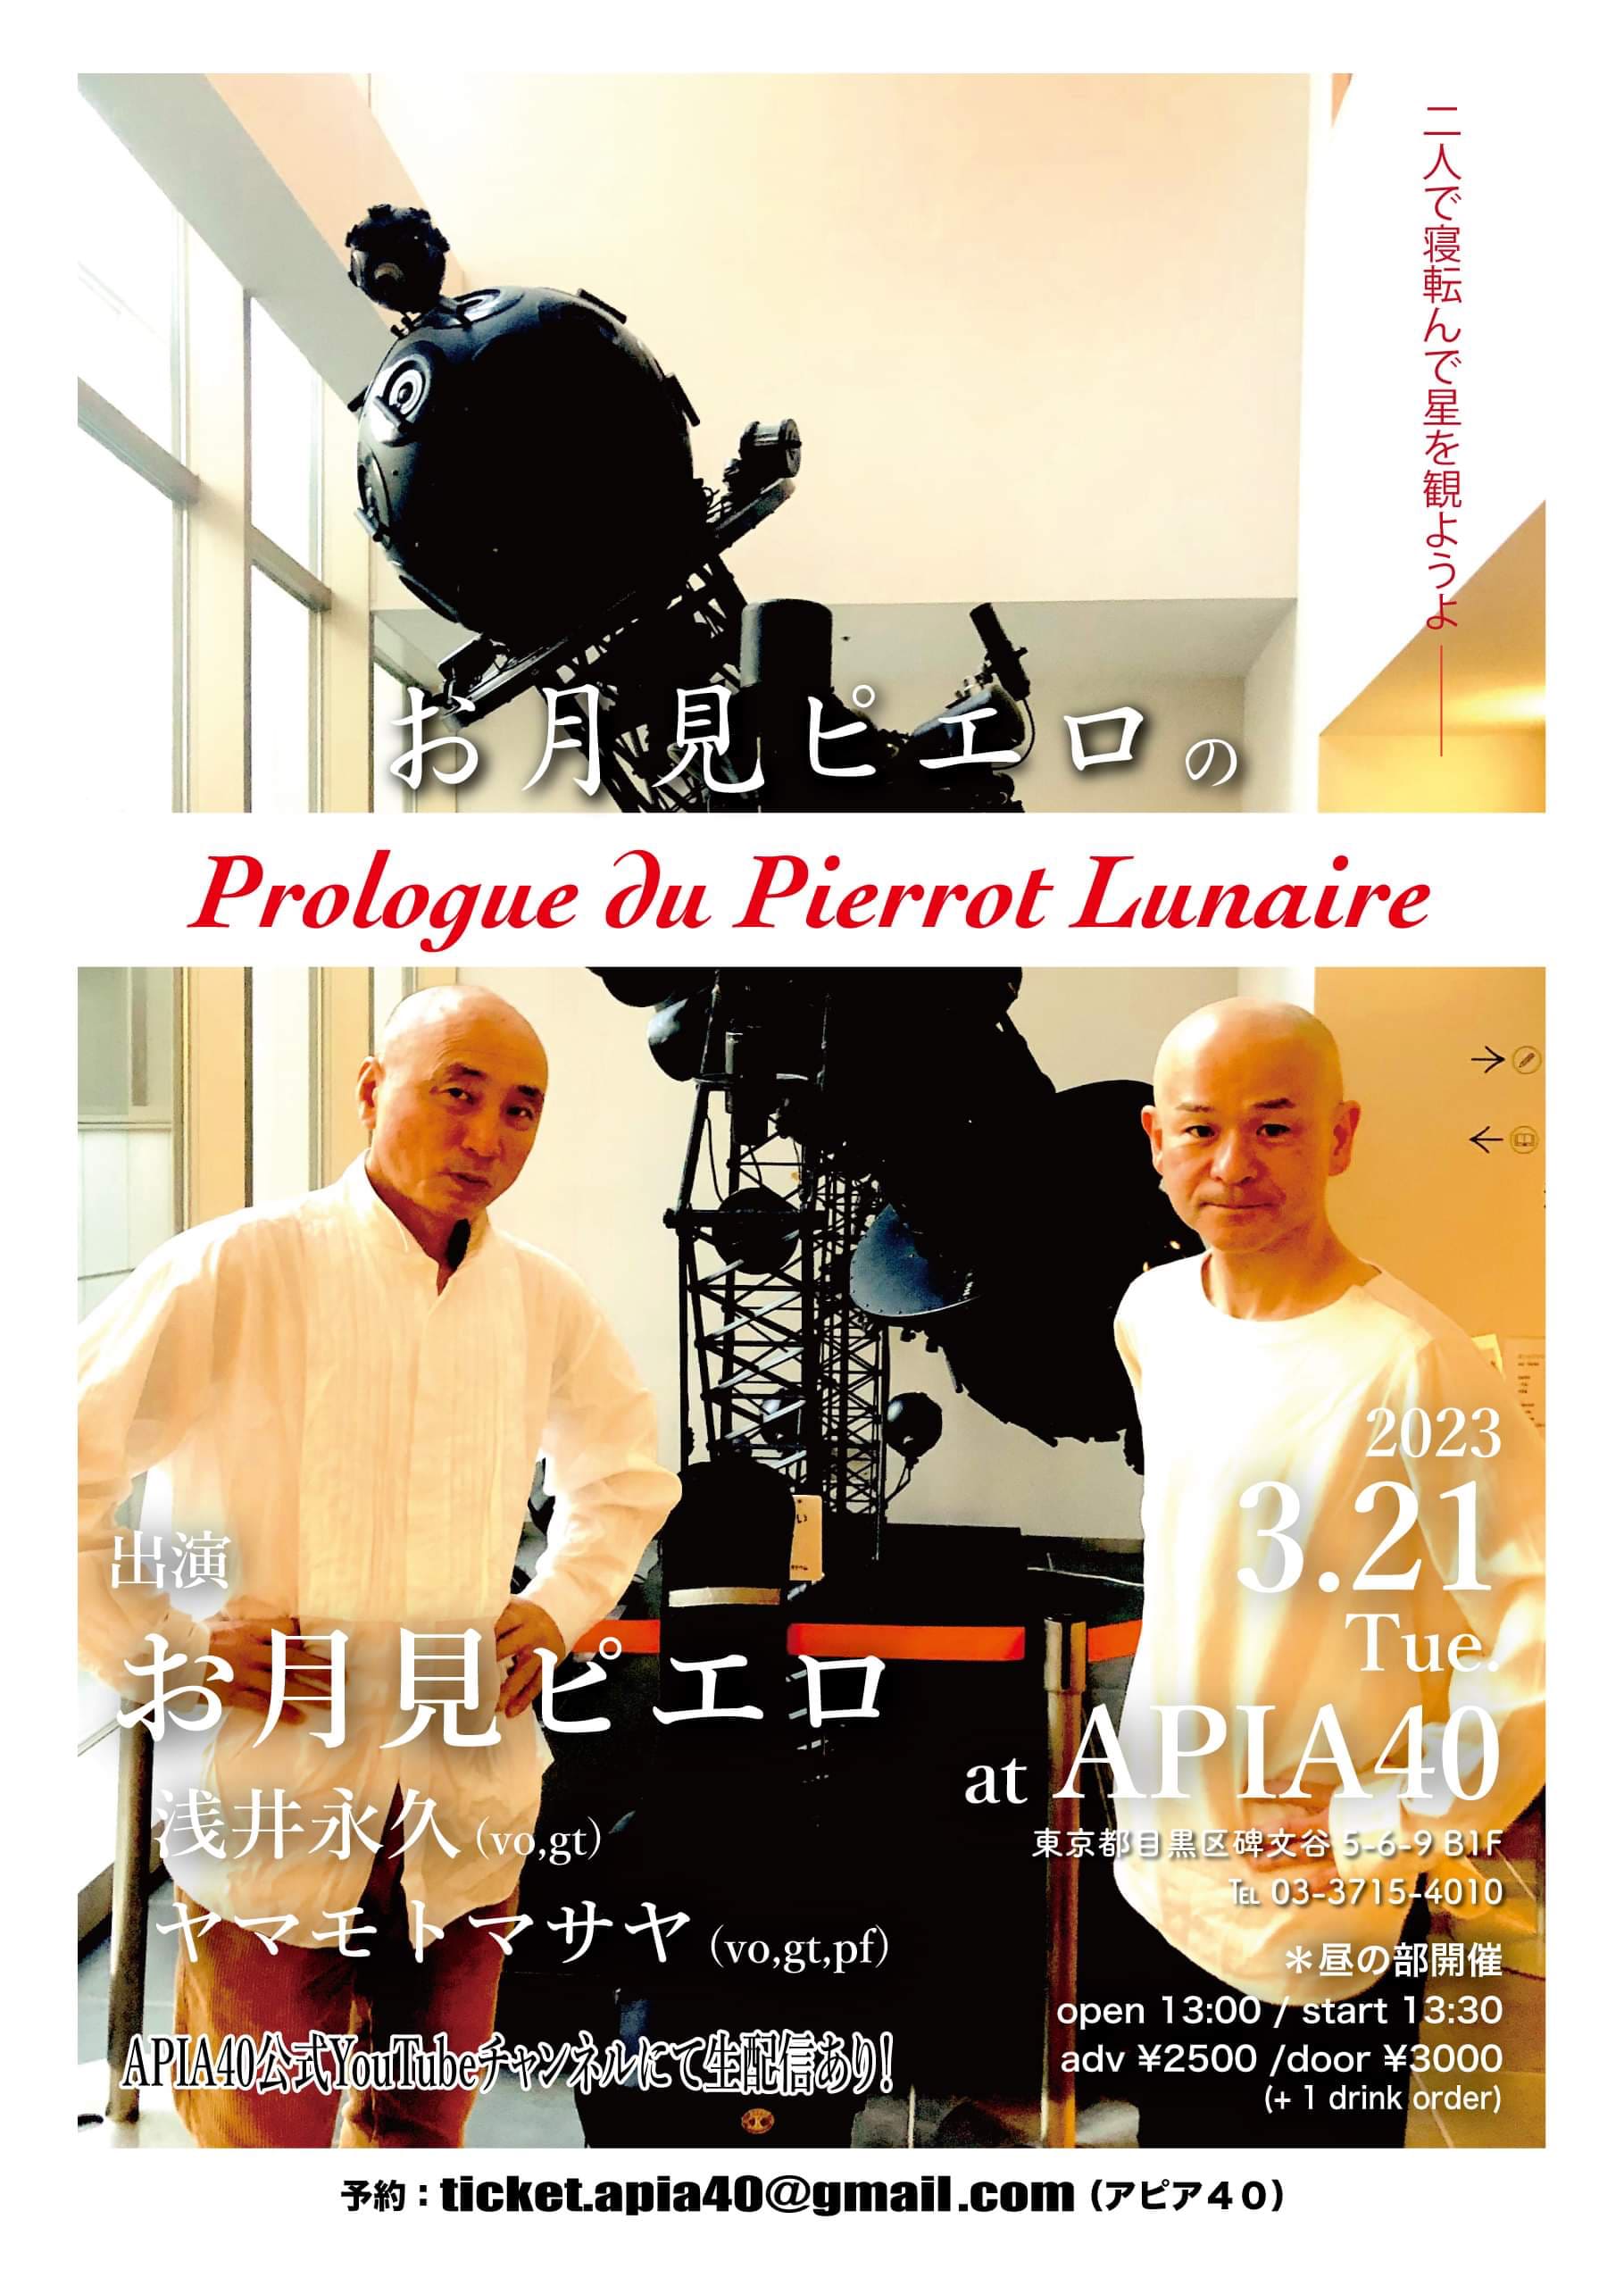 『Prologue du Pierrot Lunaire』出演：お月見ピエロ［ヤマモトマサヤ+浅井永久］